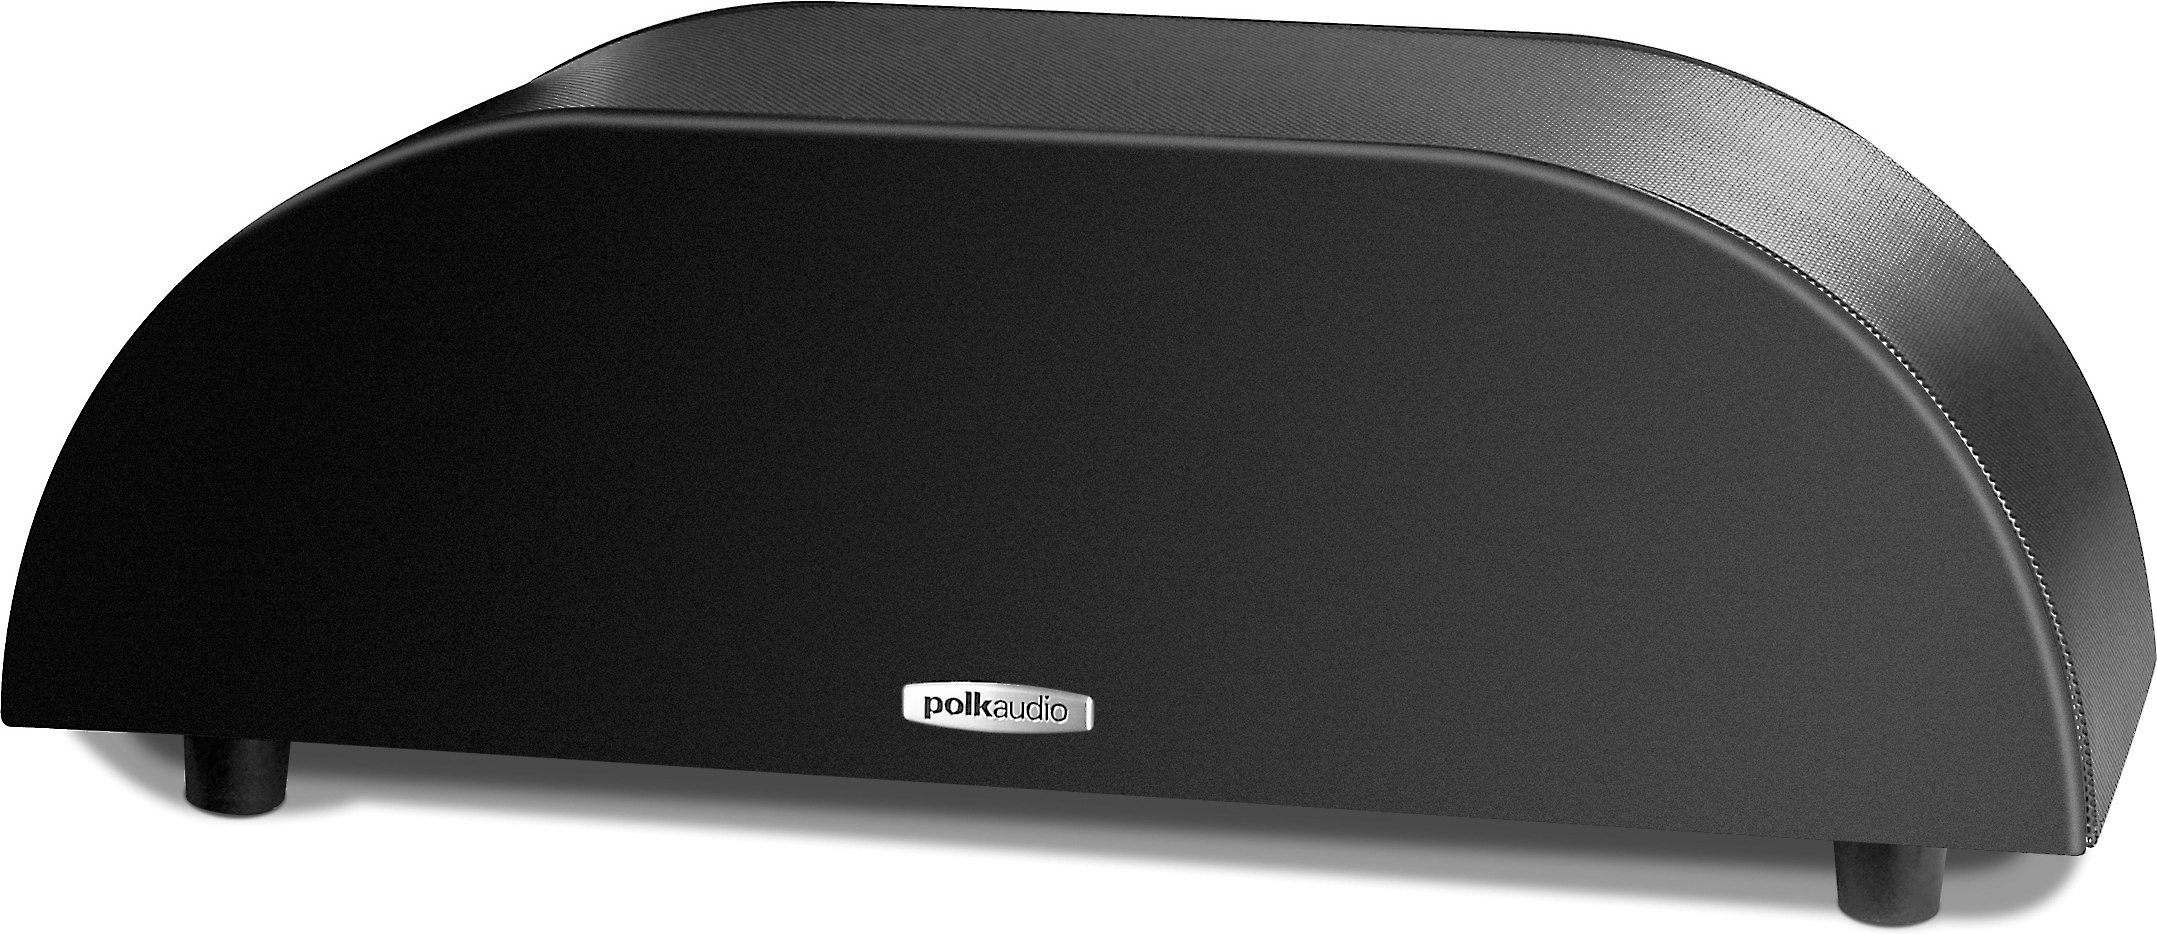 polk audio wireless surround speakers